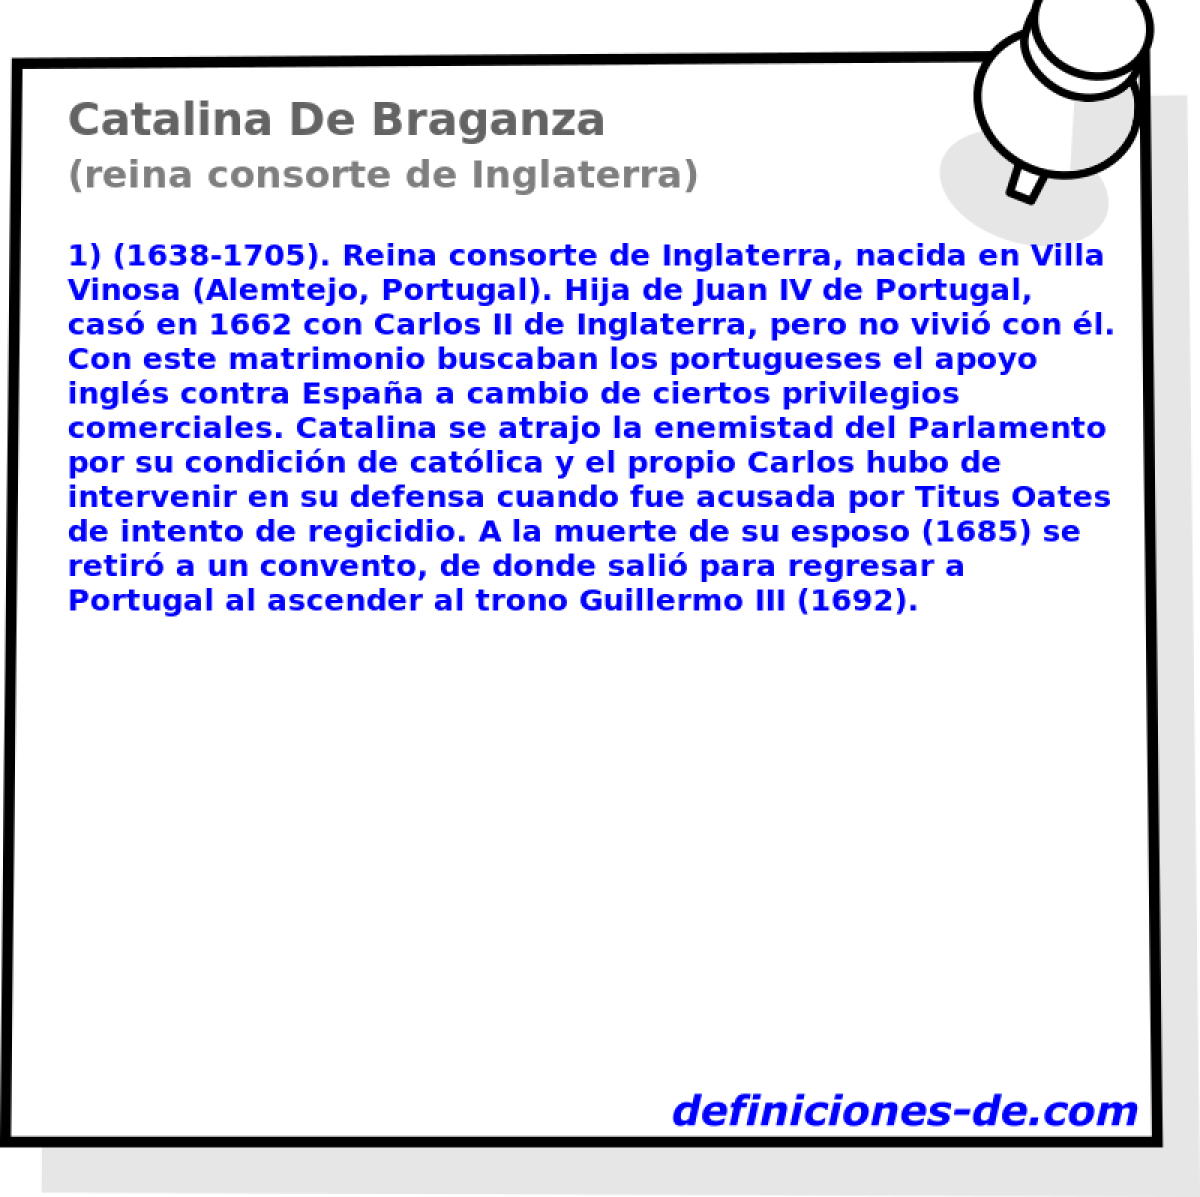 Catalina De Braganza (reina consorte de Inglaterra)